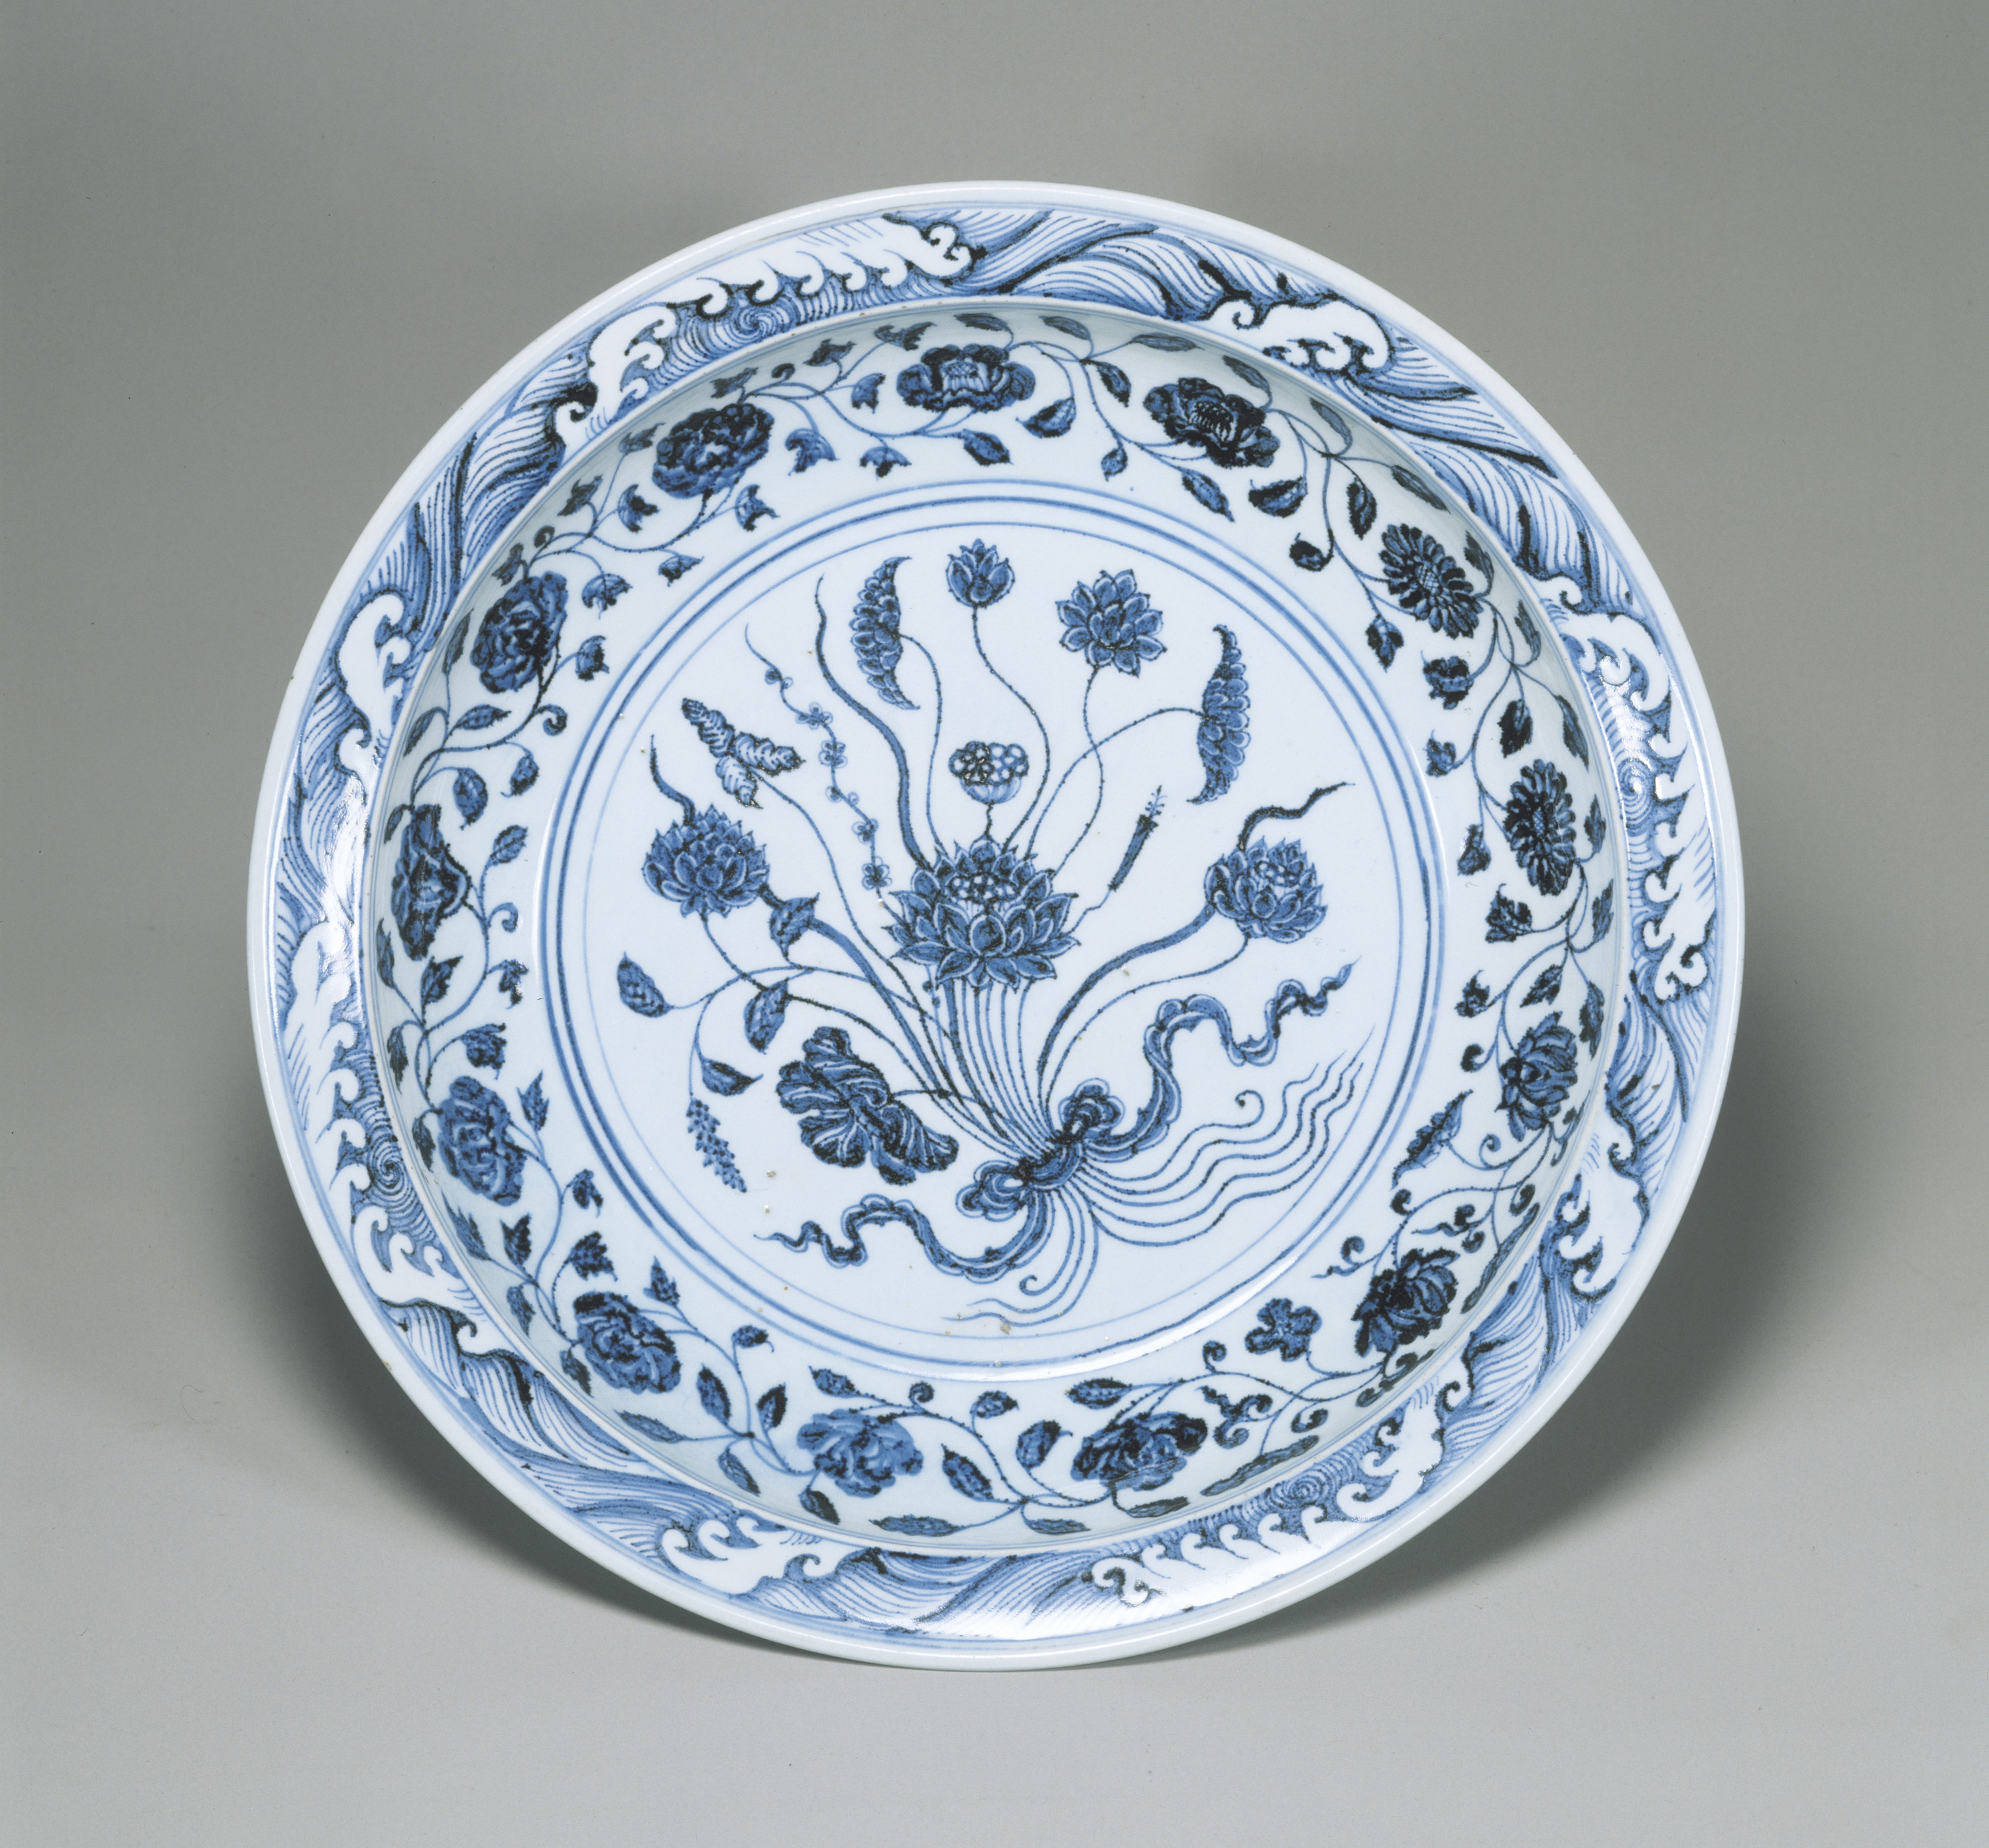 blue lotus bouquet sentence platter 東京国立博物館蔵品 青花束蓮文大皿 | 陶器, 陶磁器, 磁器